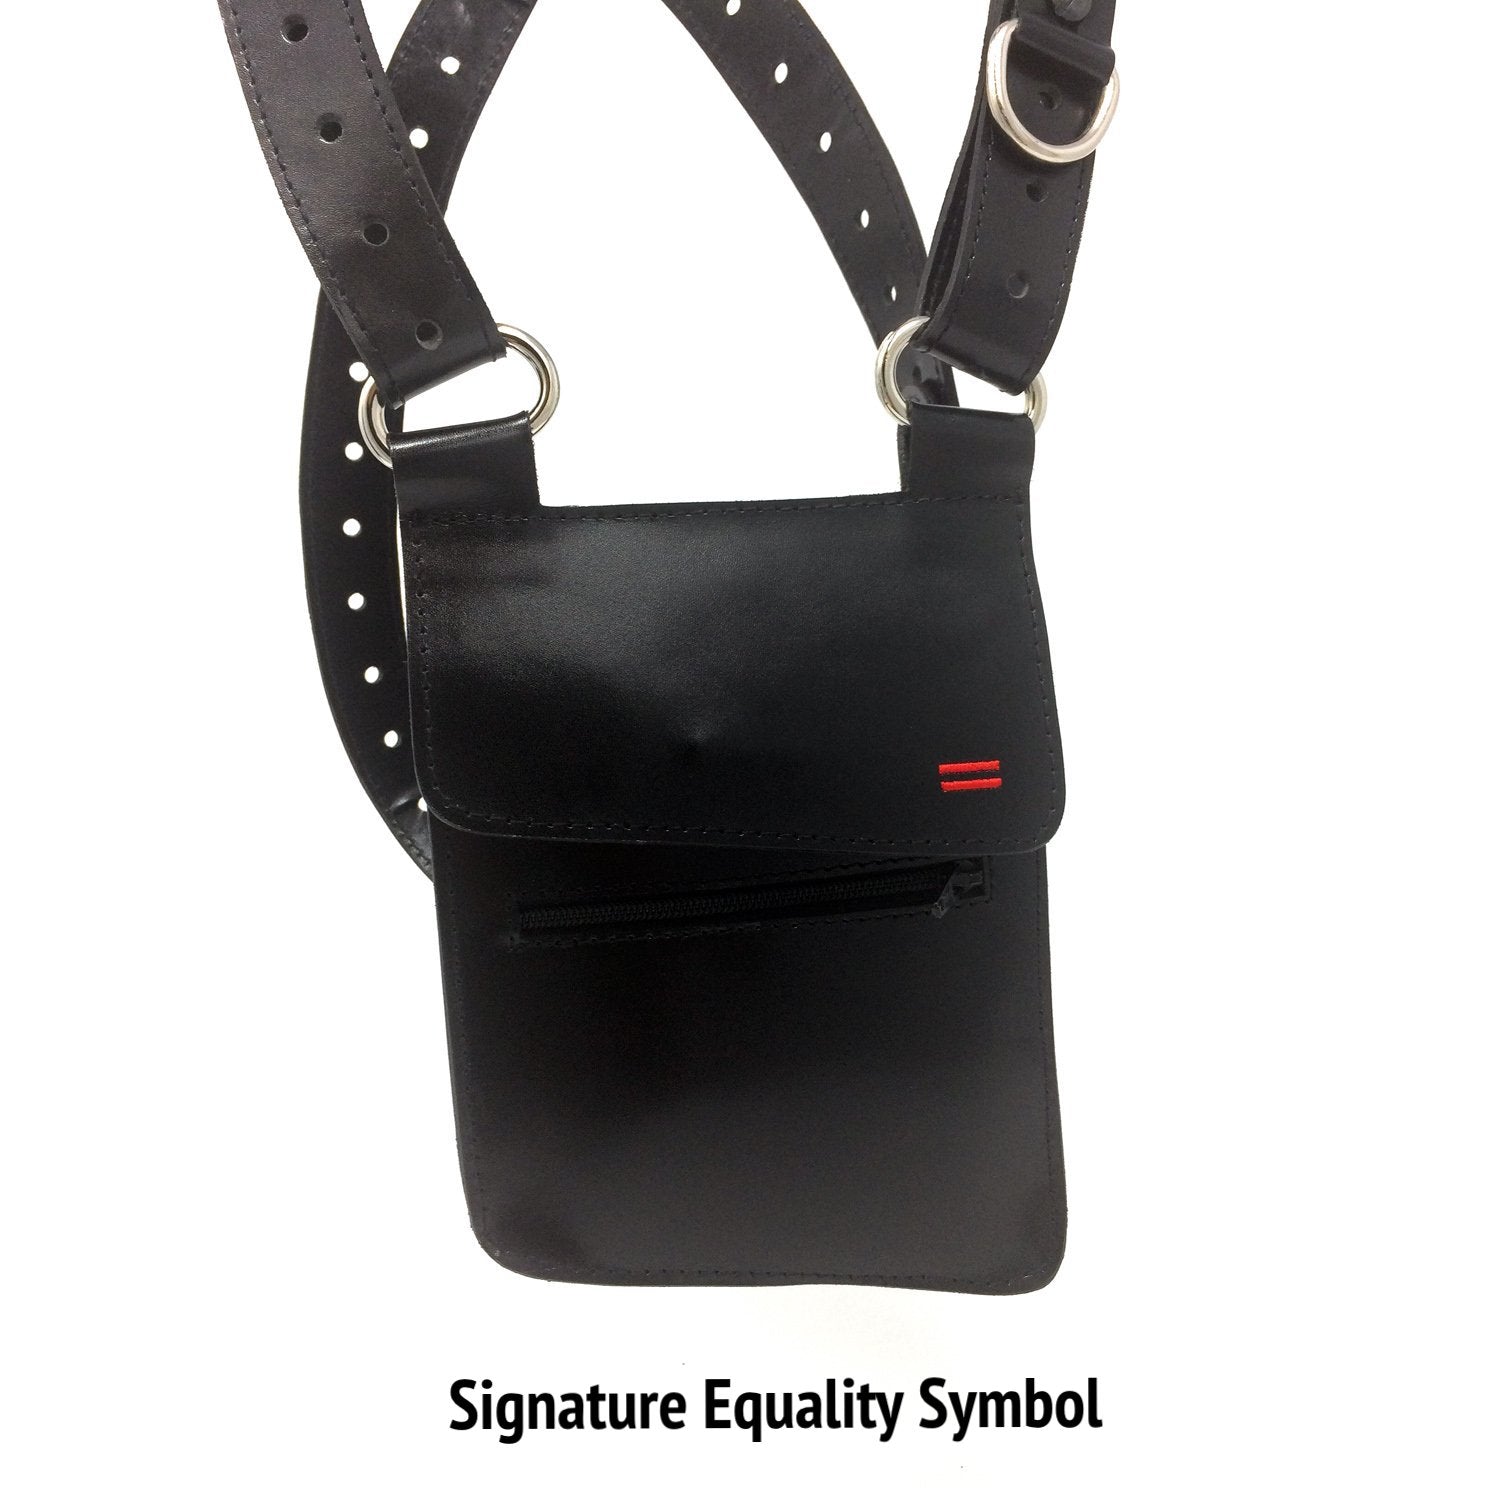 NEW) Genderfree Bag with Kacy + Adjustable | (Single Modular Dual) NiK v2 Utility Harness or Holster